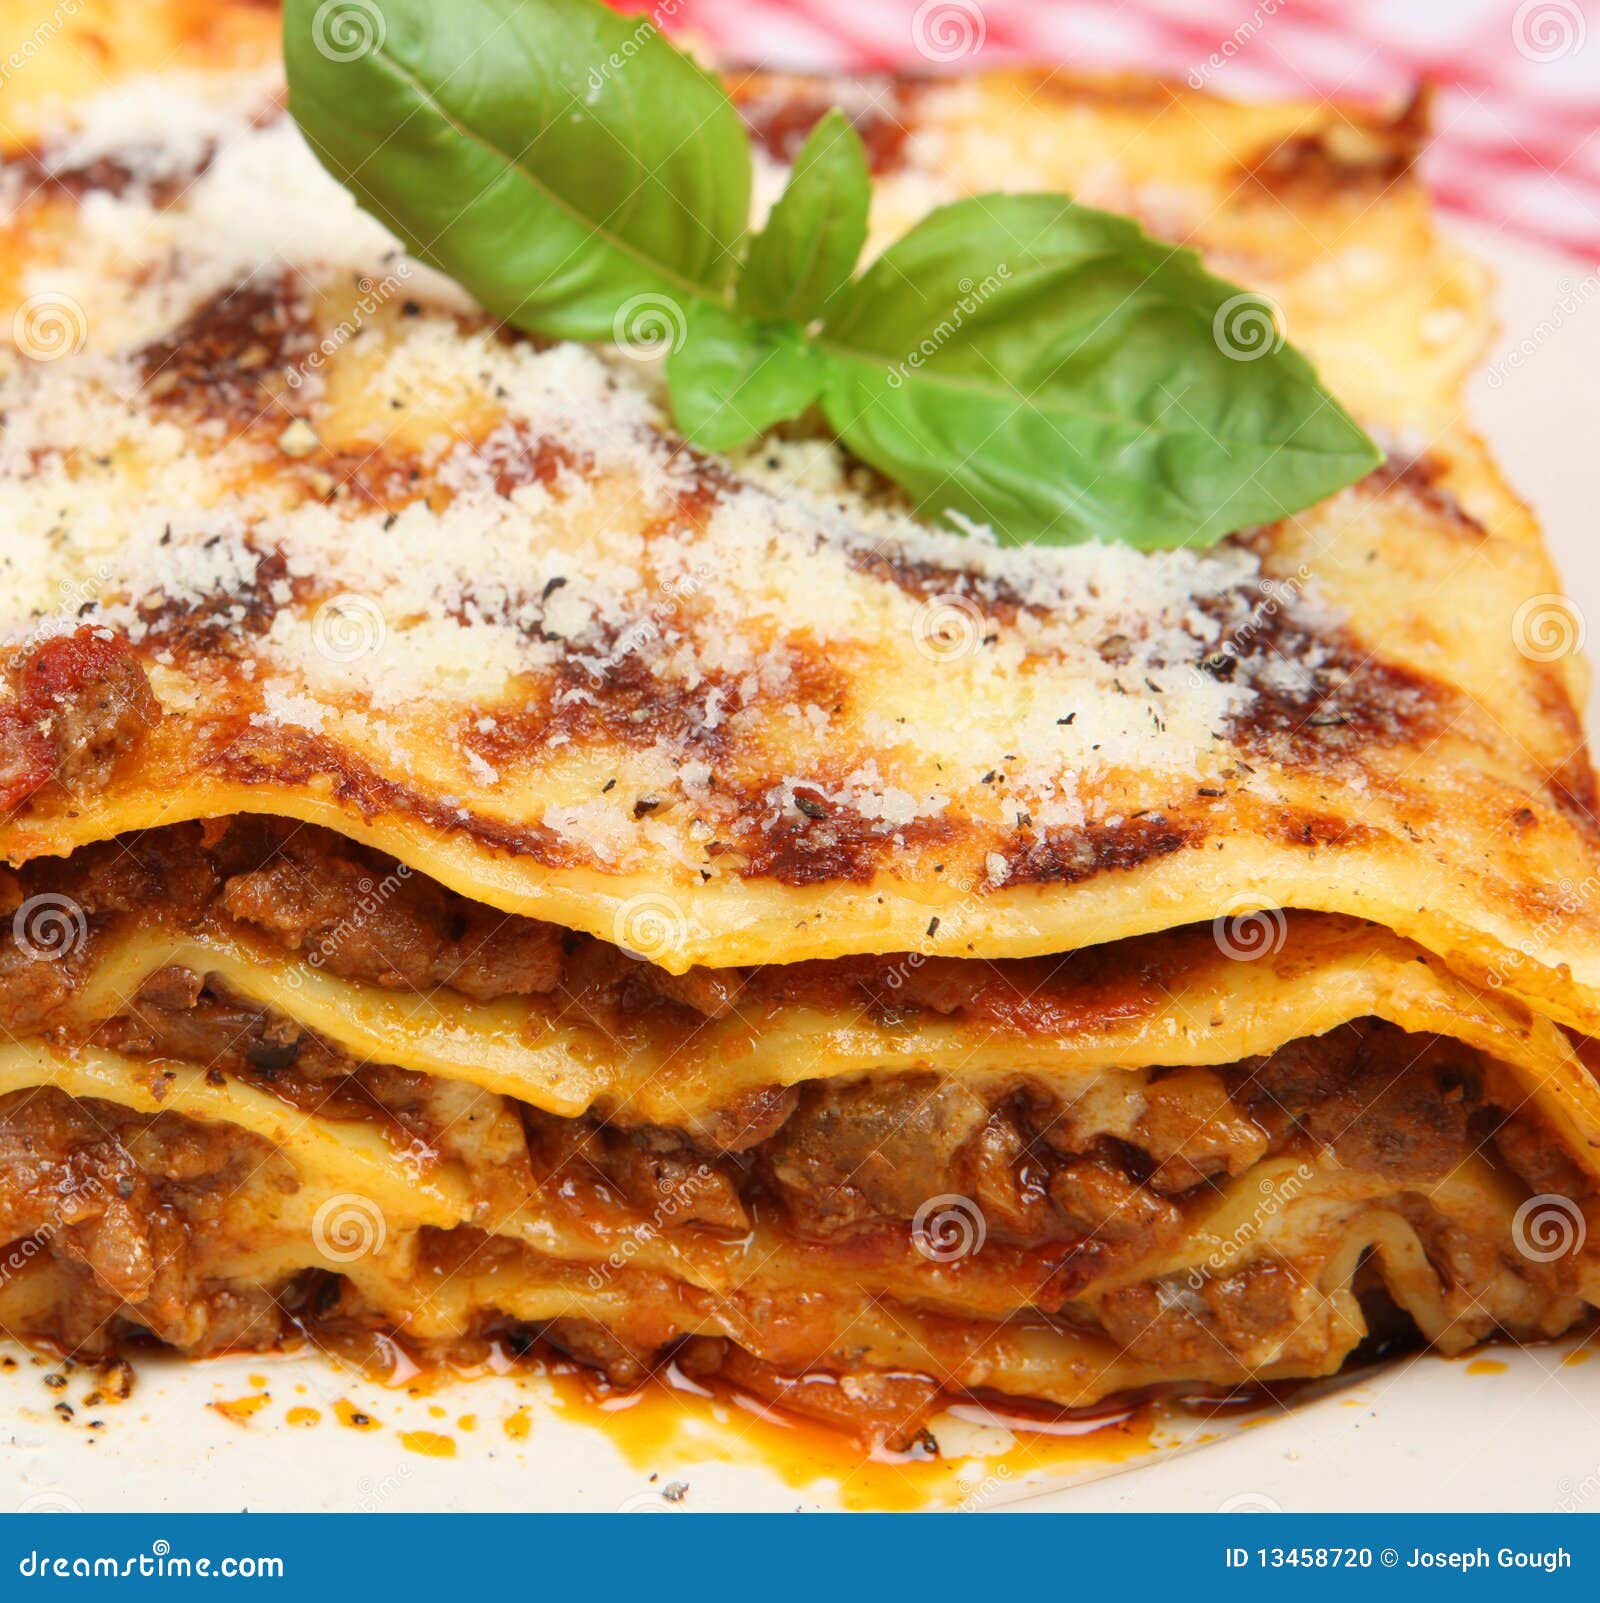 Beef Lasagna stock photo. Image of pasta, garnish, slice - 13458720